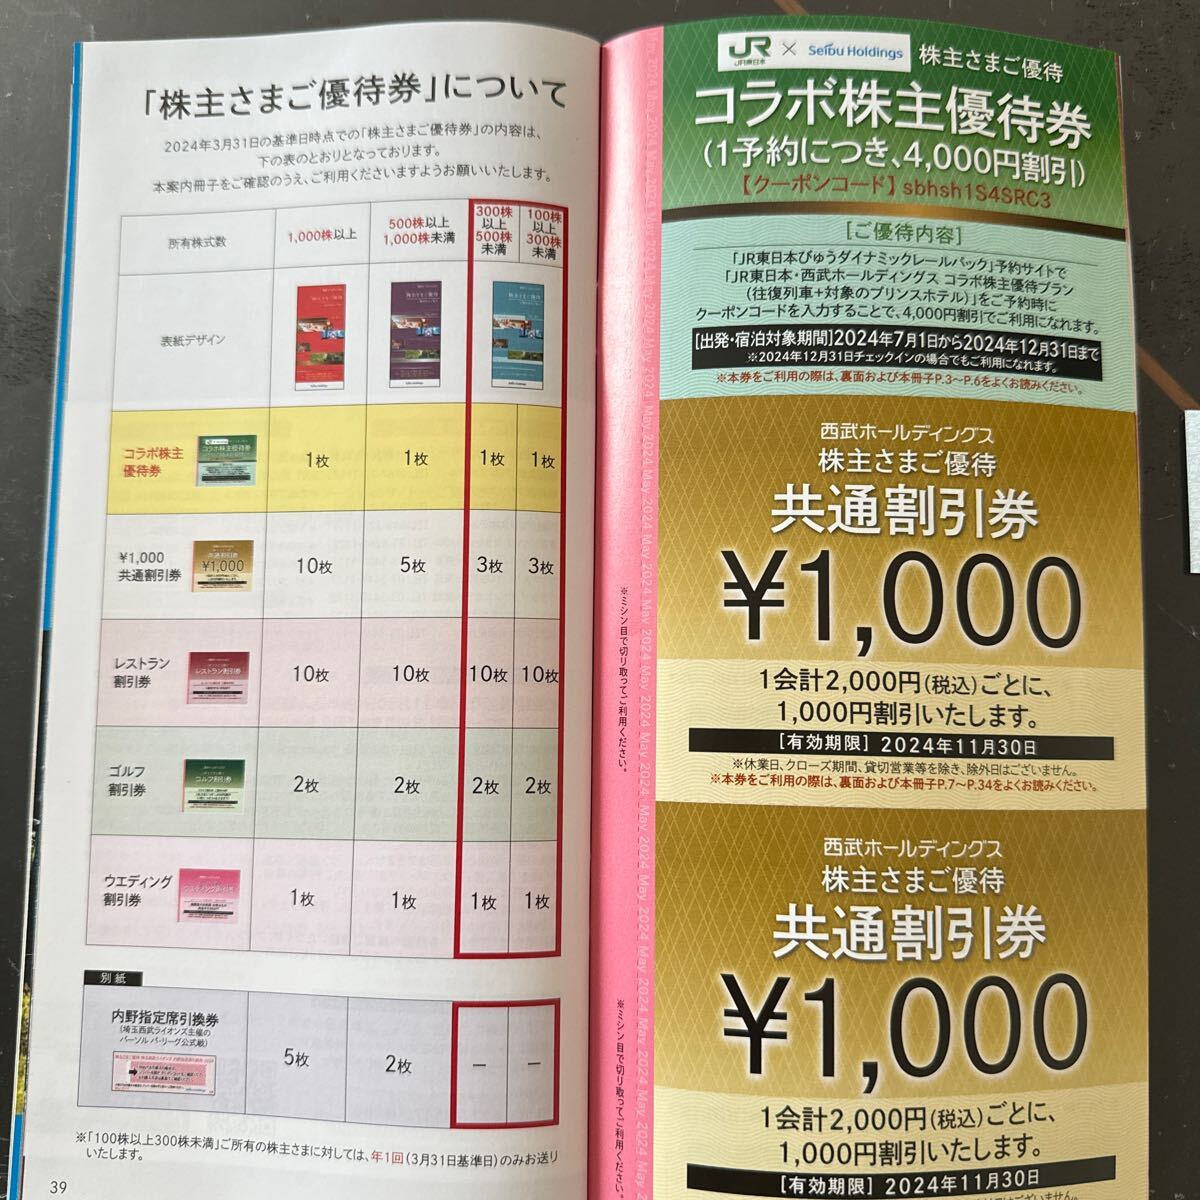  Seibu holding s stockholder hospitality hospitality booklet passenger ticket 2 sheets 11 month 30 day . free shipping 